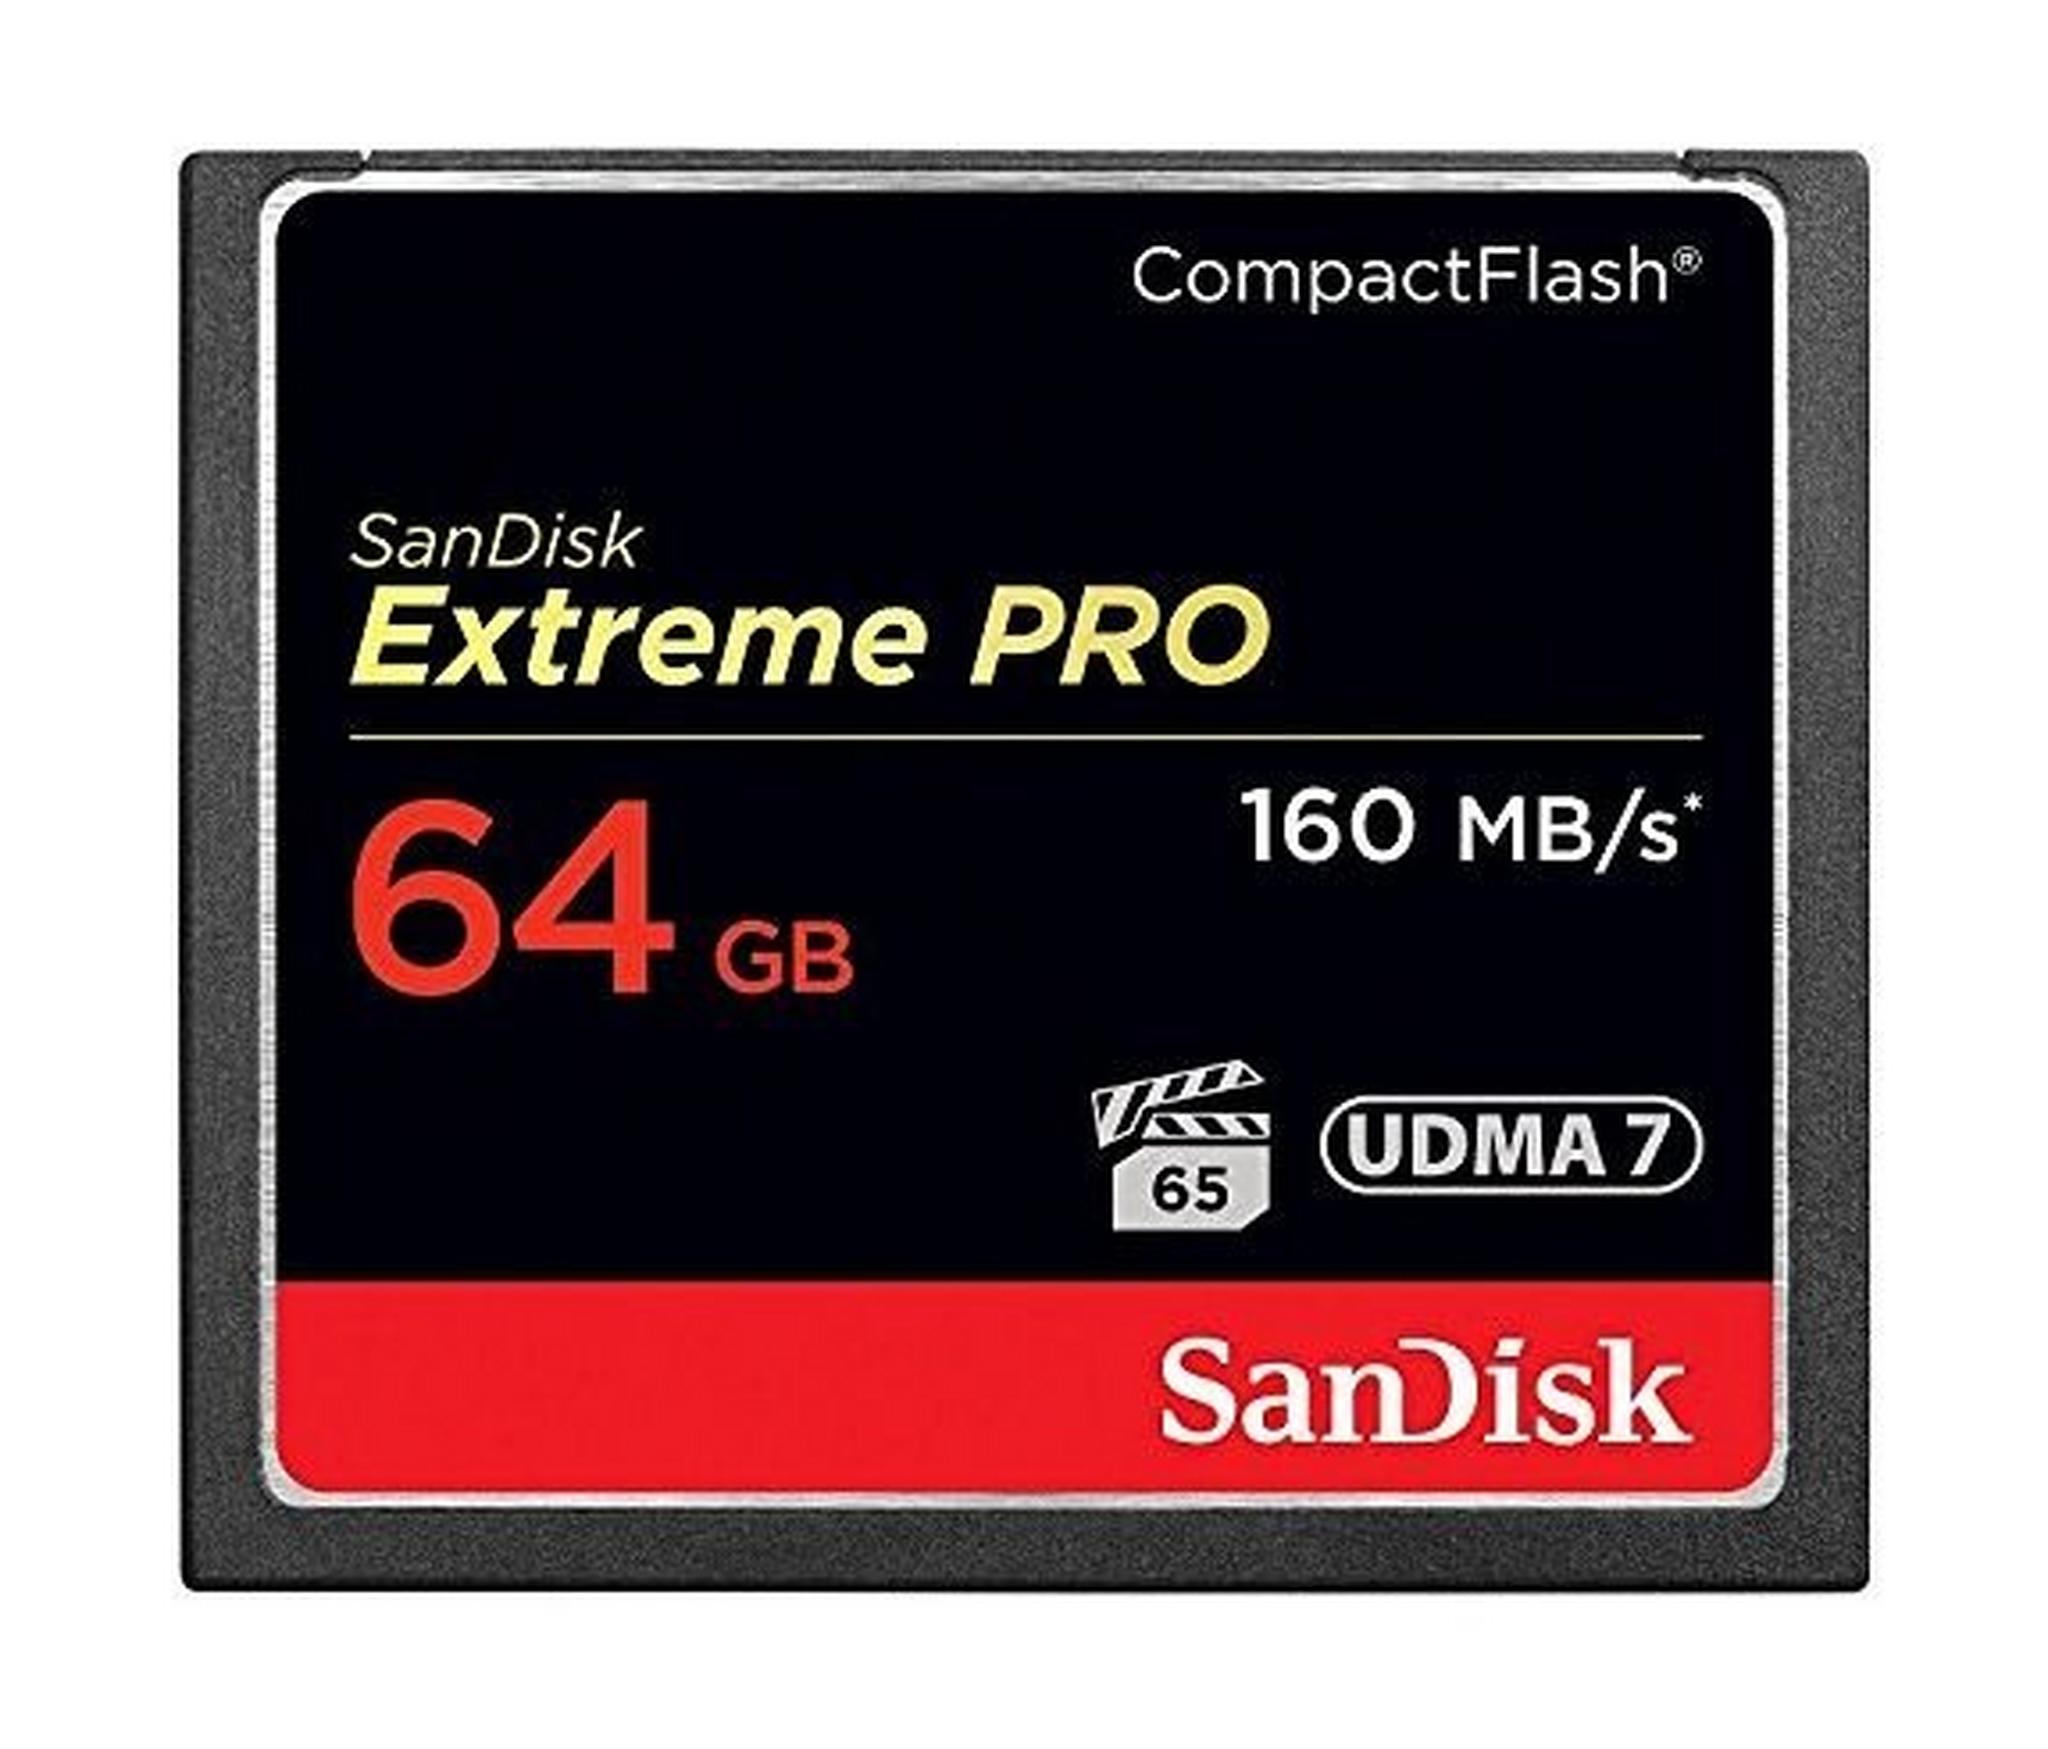 SanDisk Extreme Pro CompactFlash 64GB 160MB/s UDMA7 Memory Card